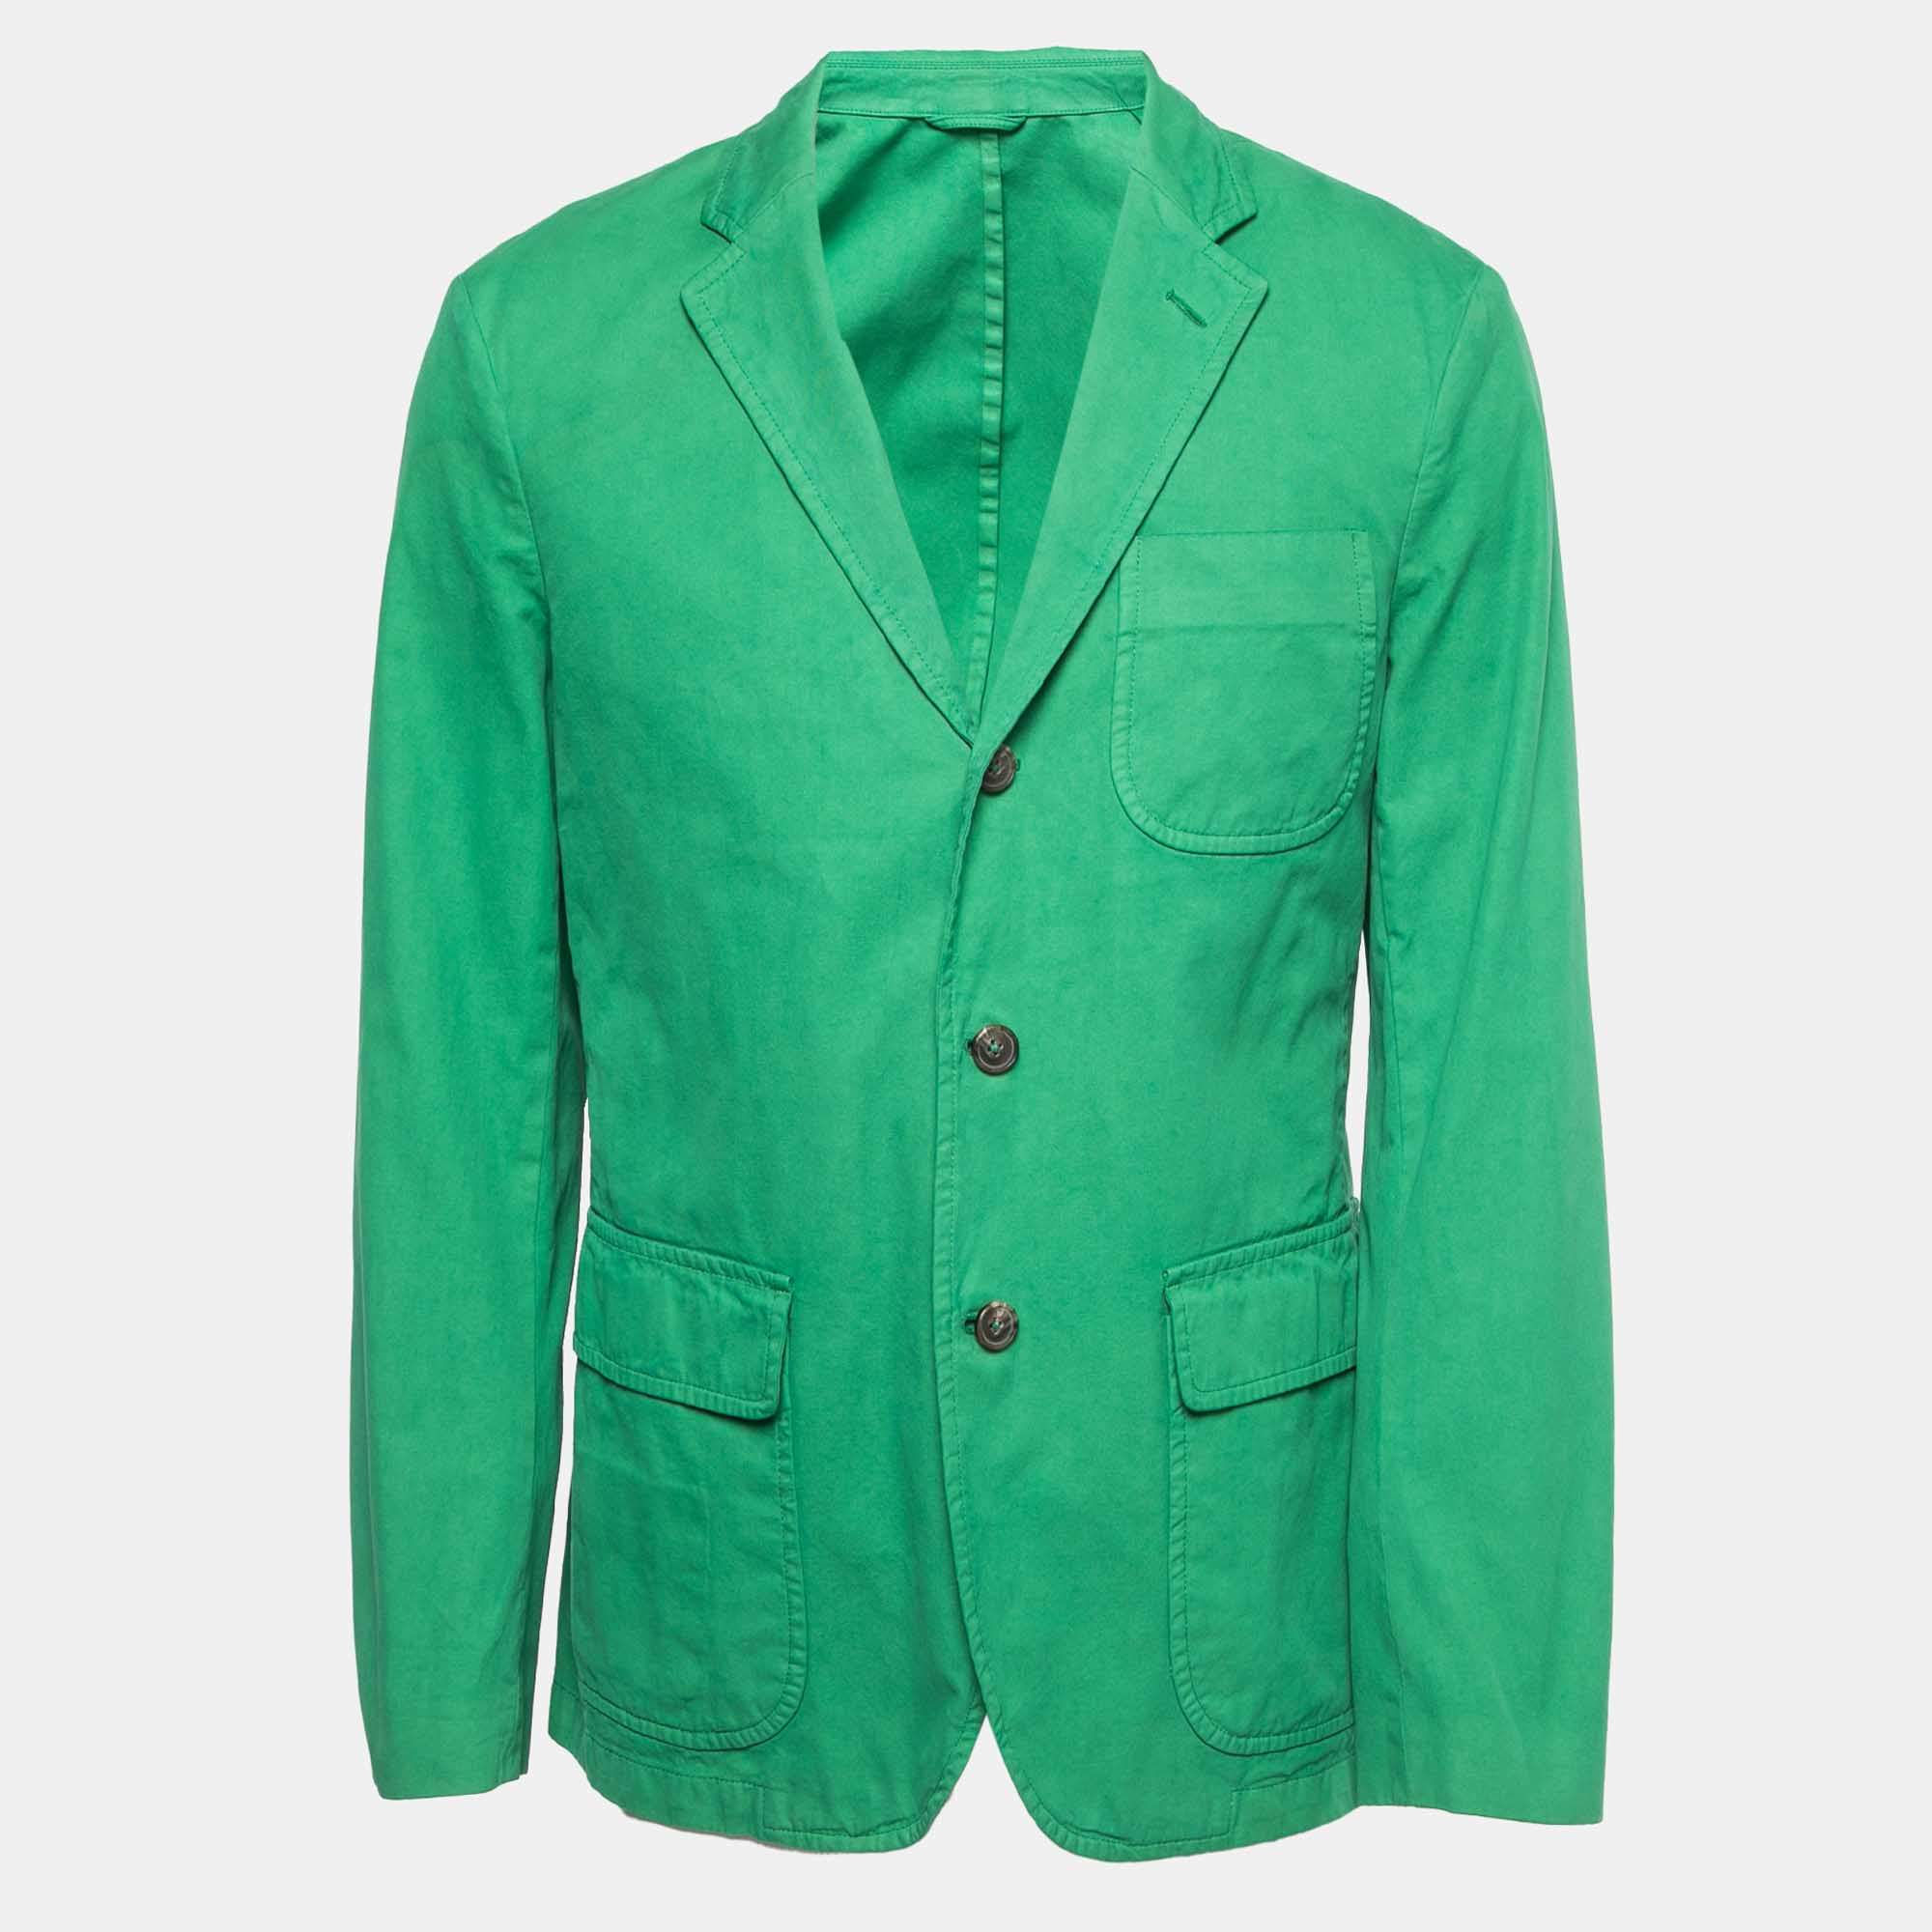 Polo Ralph Lauren Green Cotton Single Breasted Sport Jacket XL Polo ...